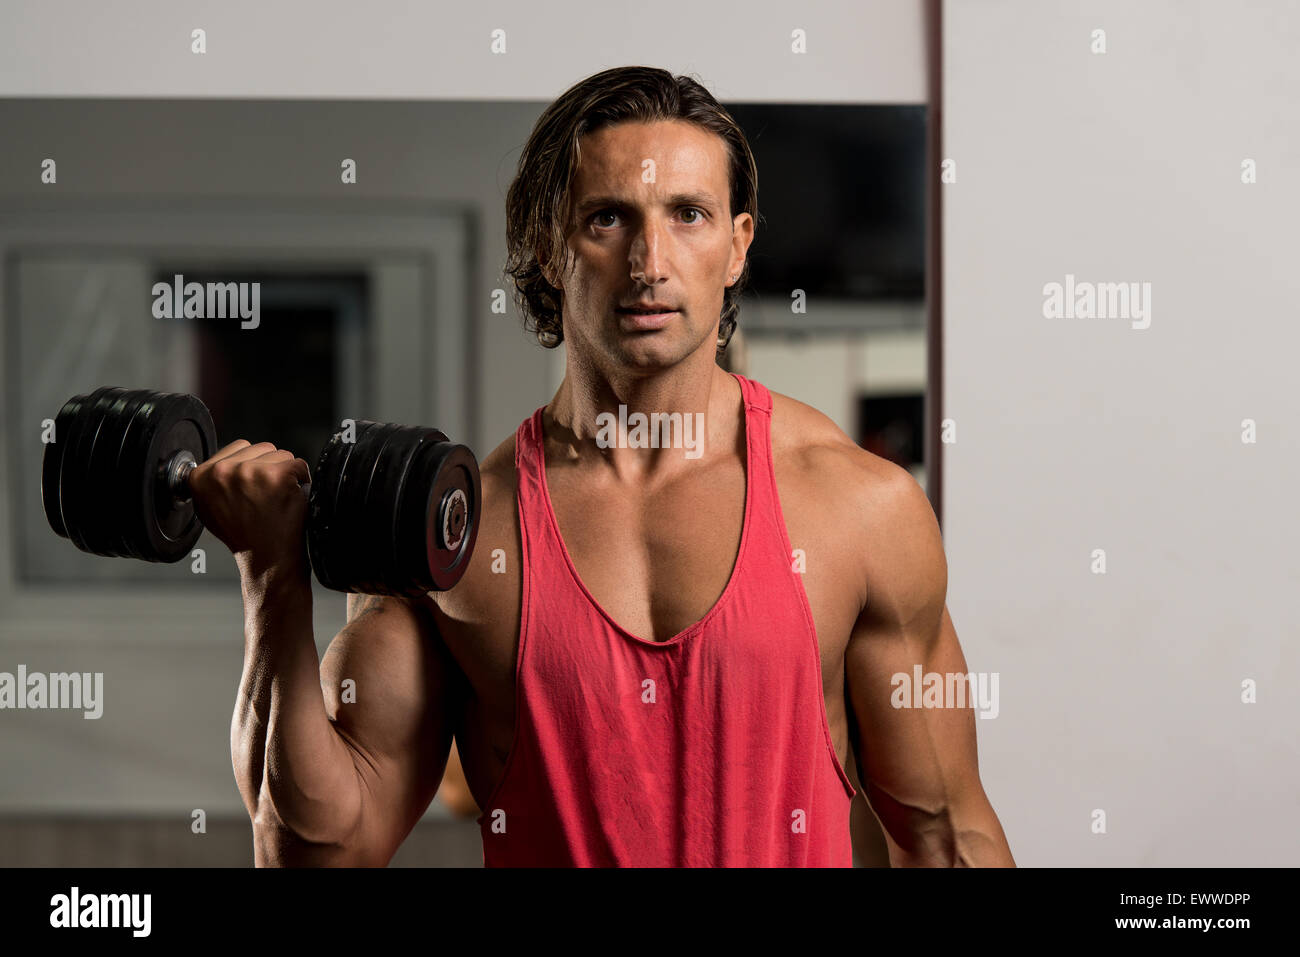 https://c8.alamy.com/comp/EWWDPP/muscular-man-exercising-in-gym-EWWDPP.jpg